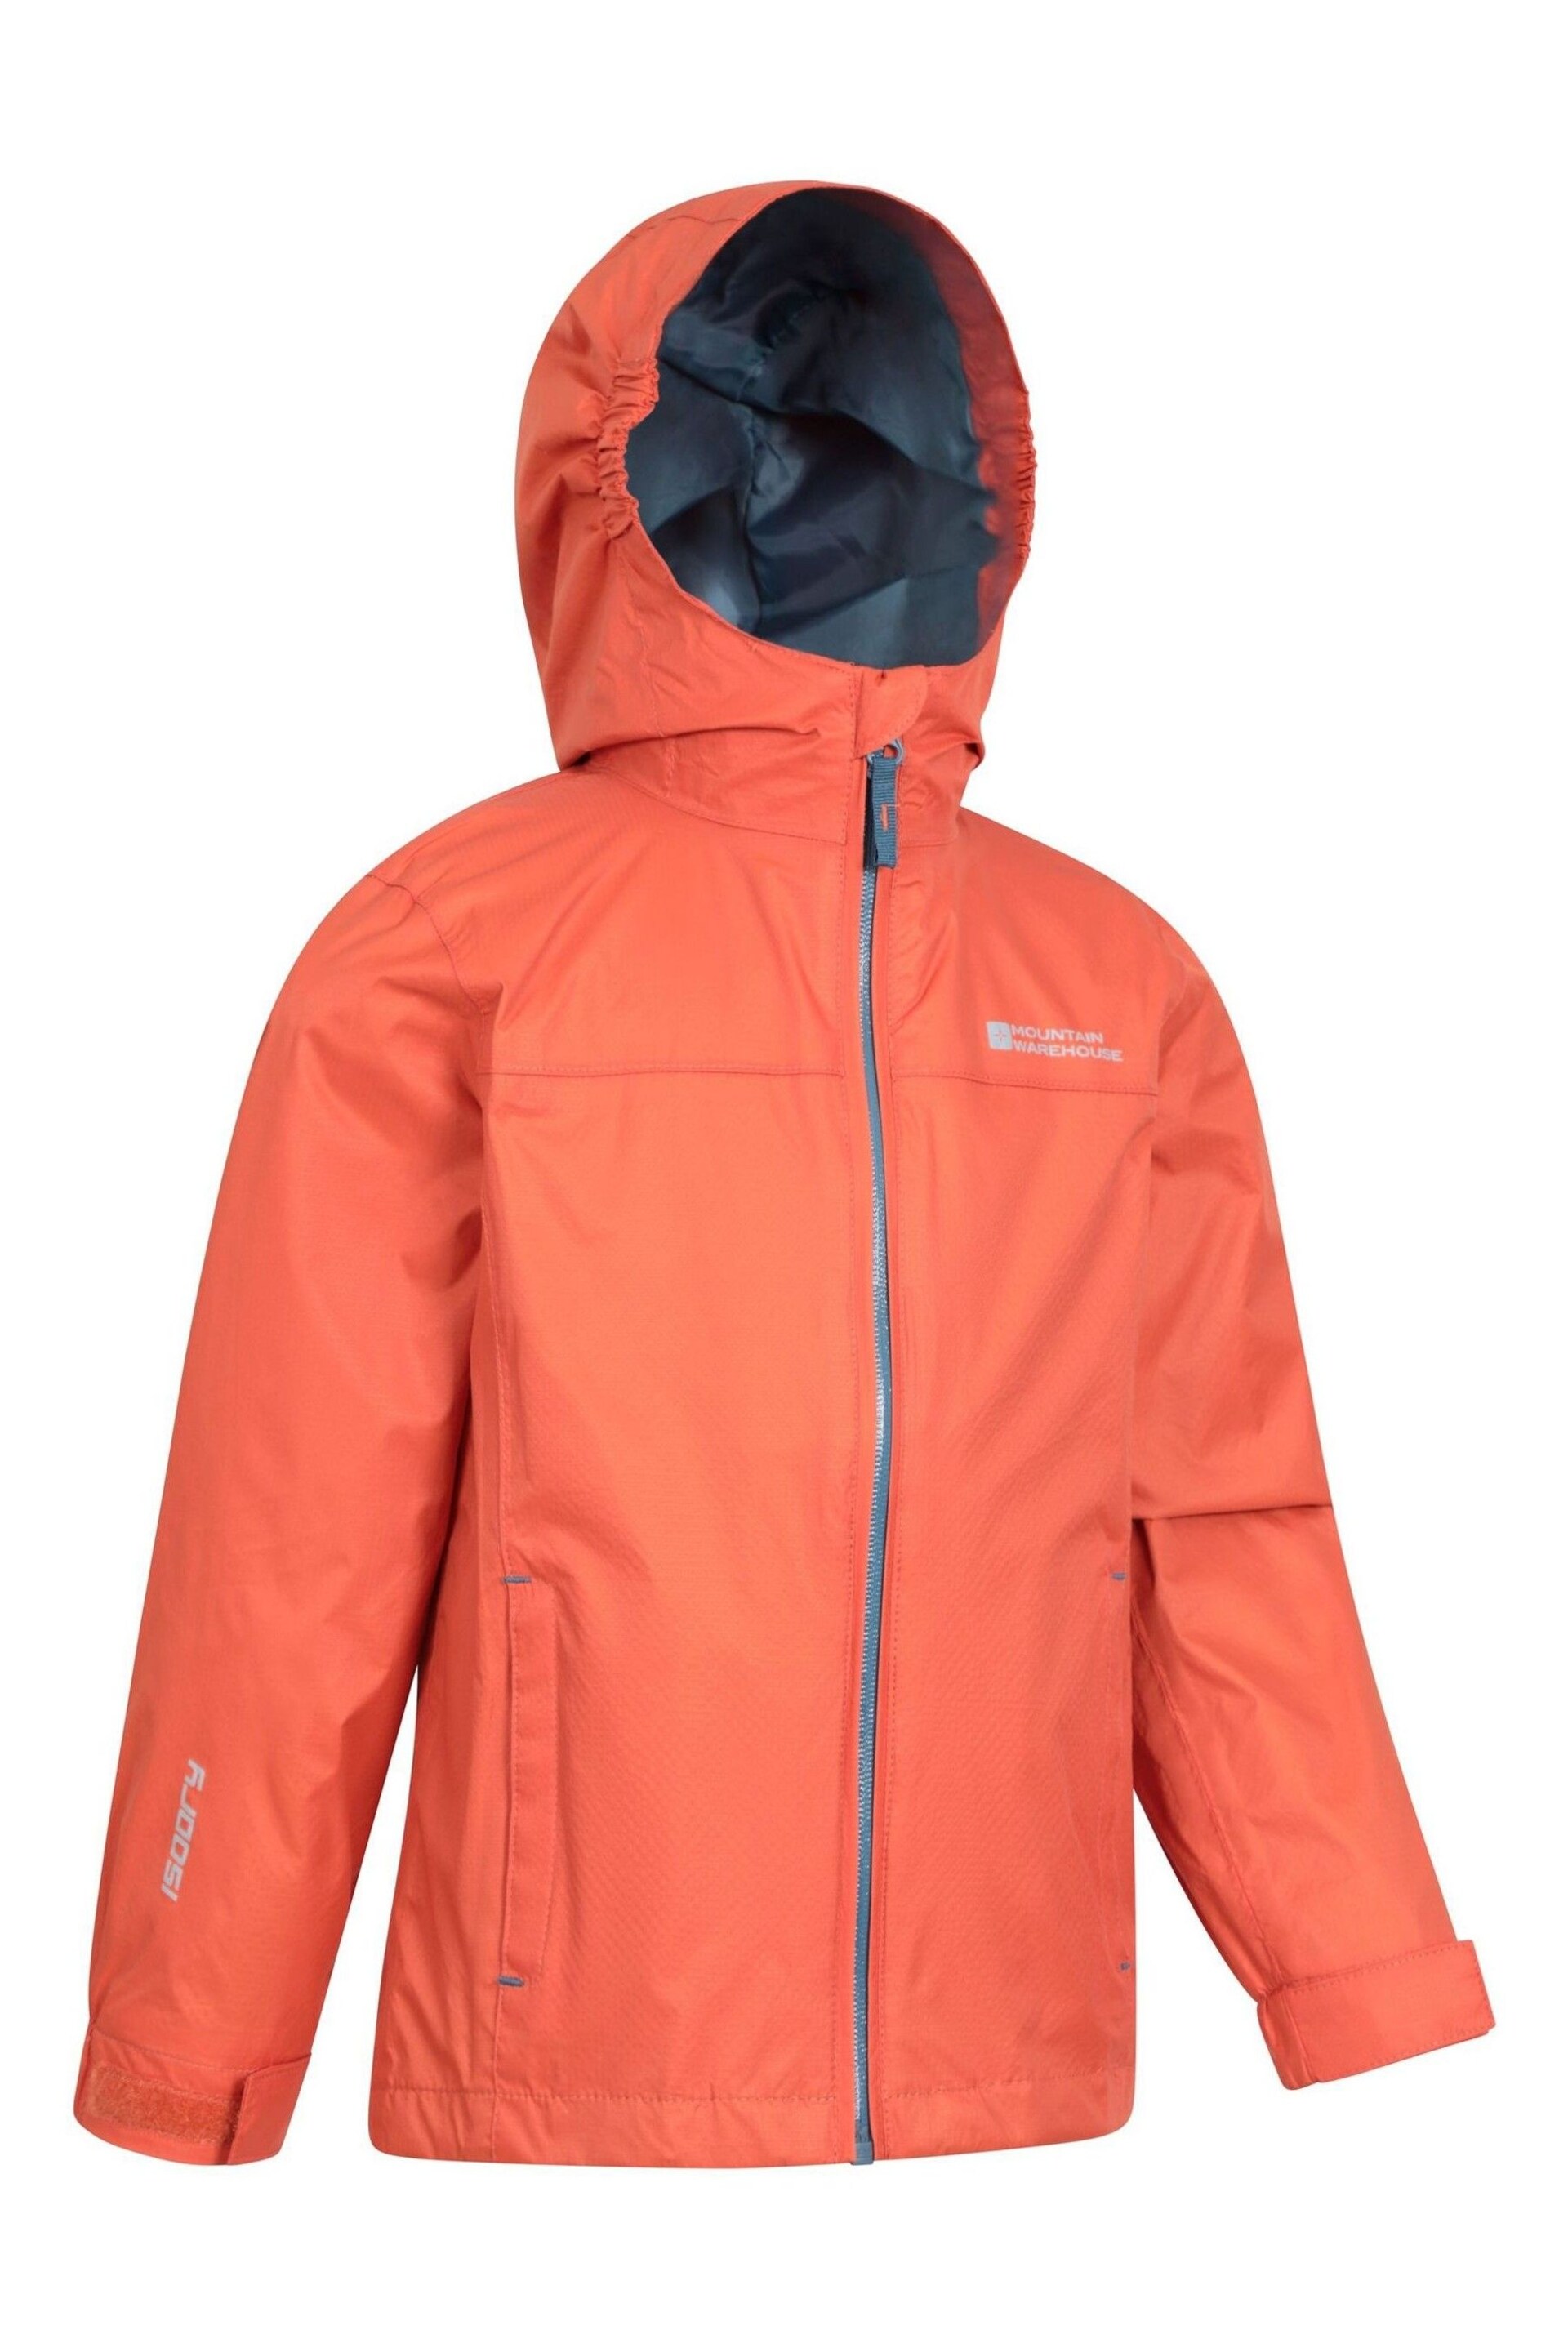 Mountain Warehouse Orange Kids Torrent Waterproof Jacket - Image 2 of 5